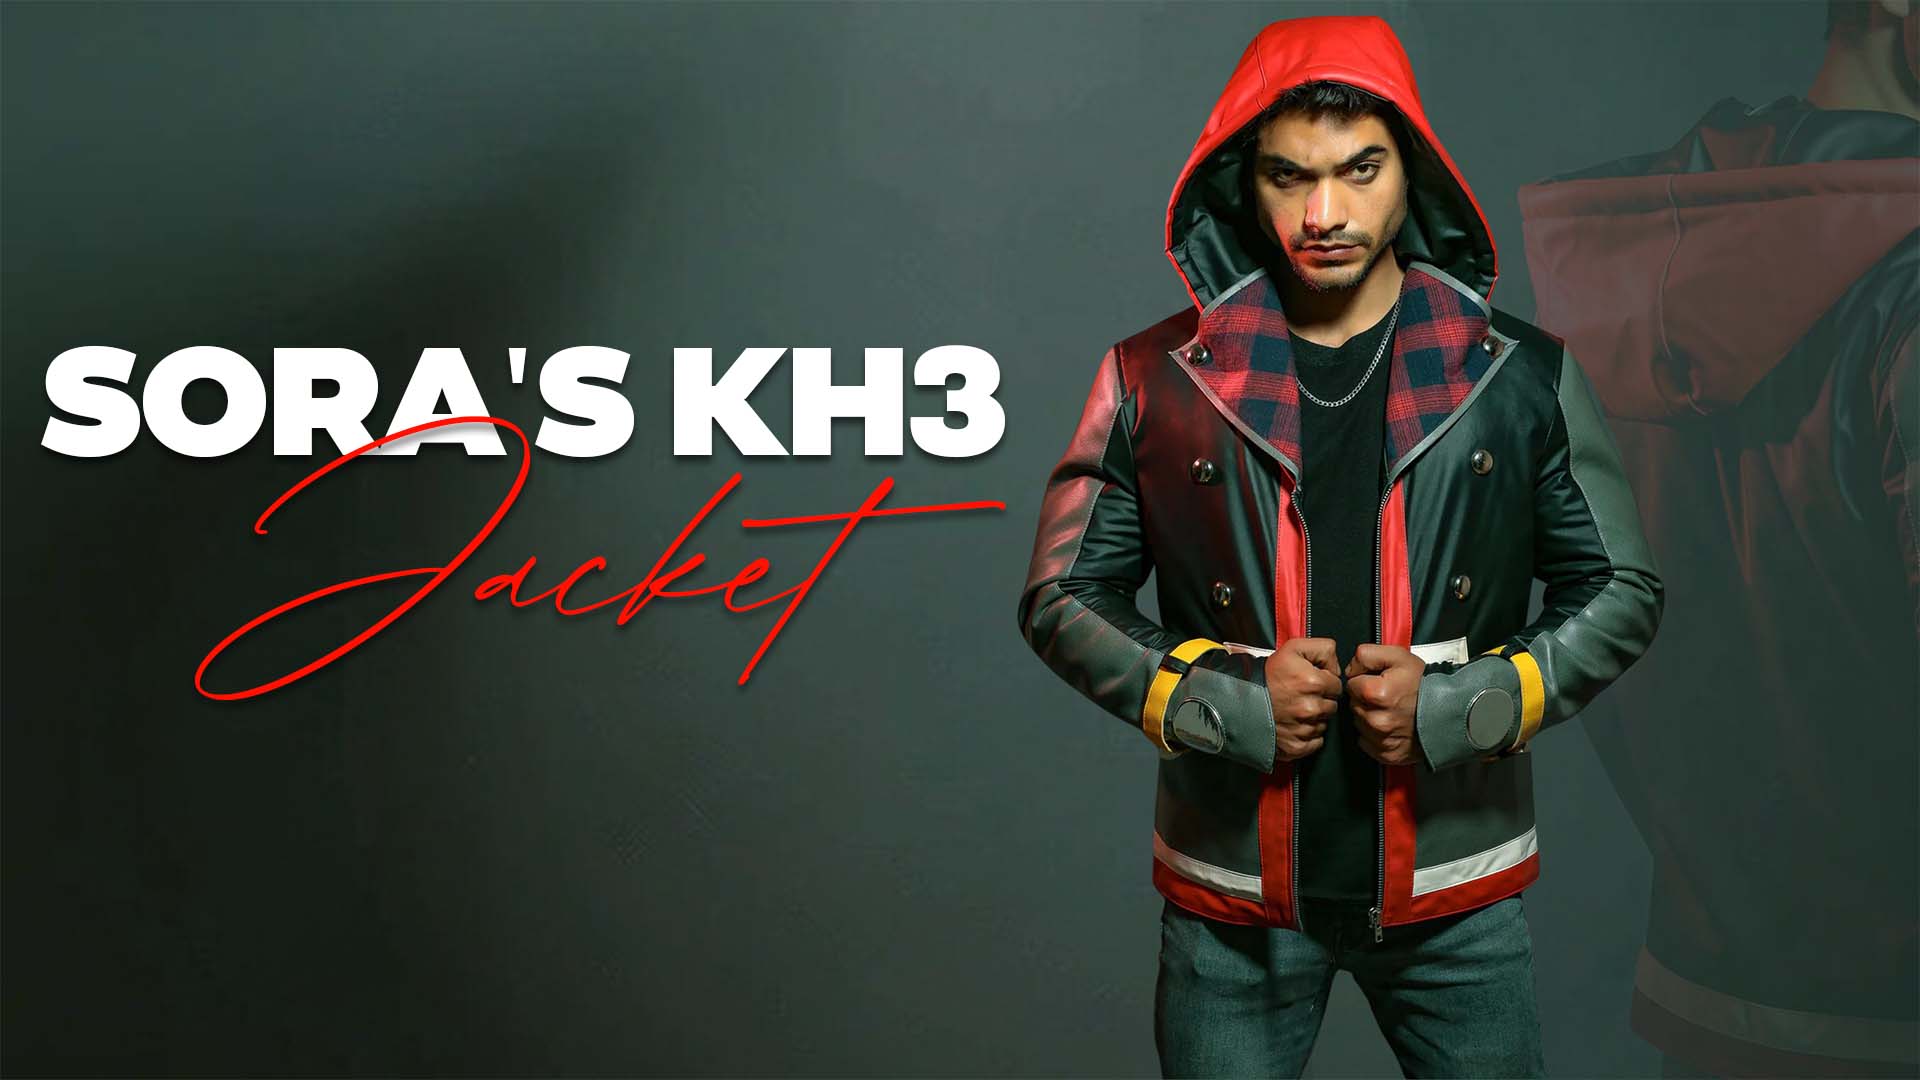 Sora's KH3 Jacket